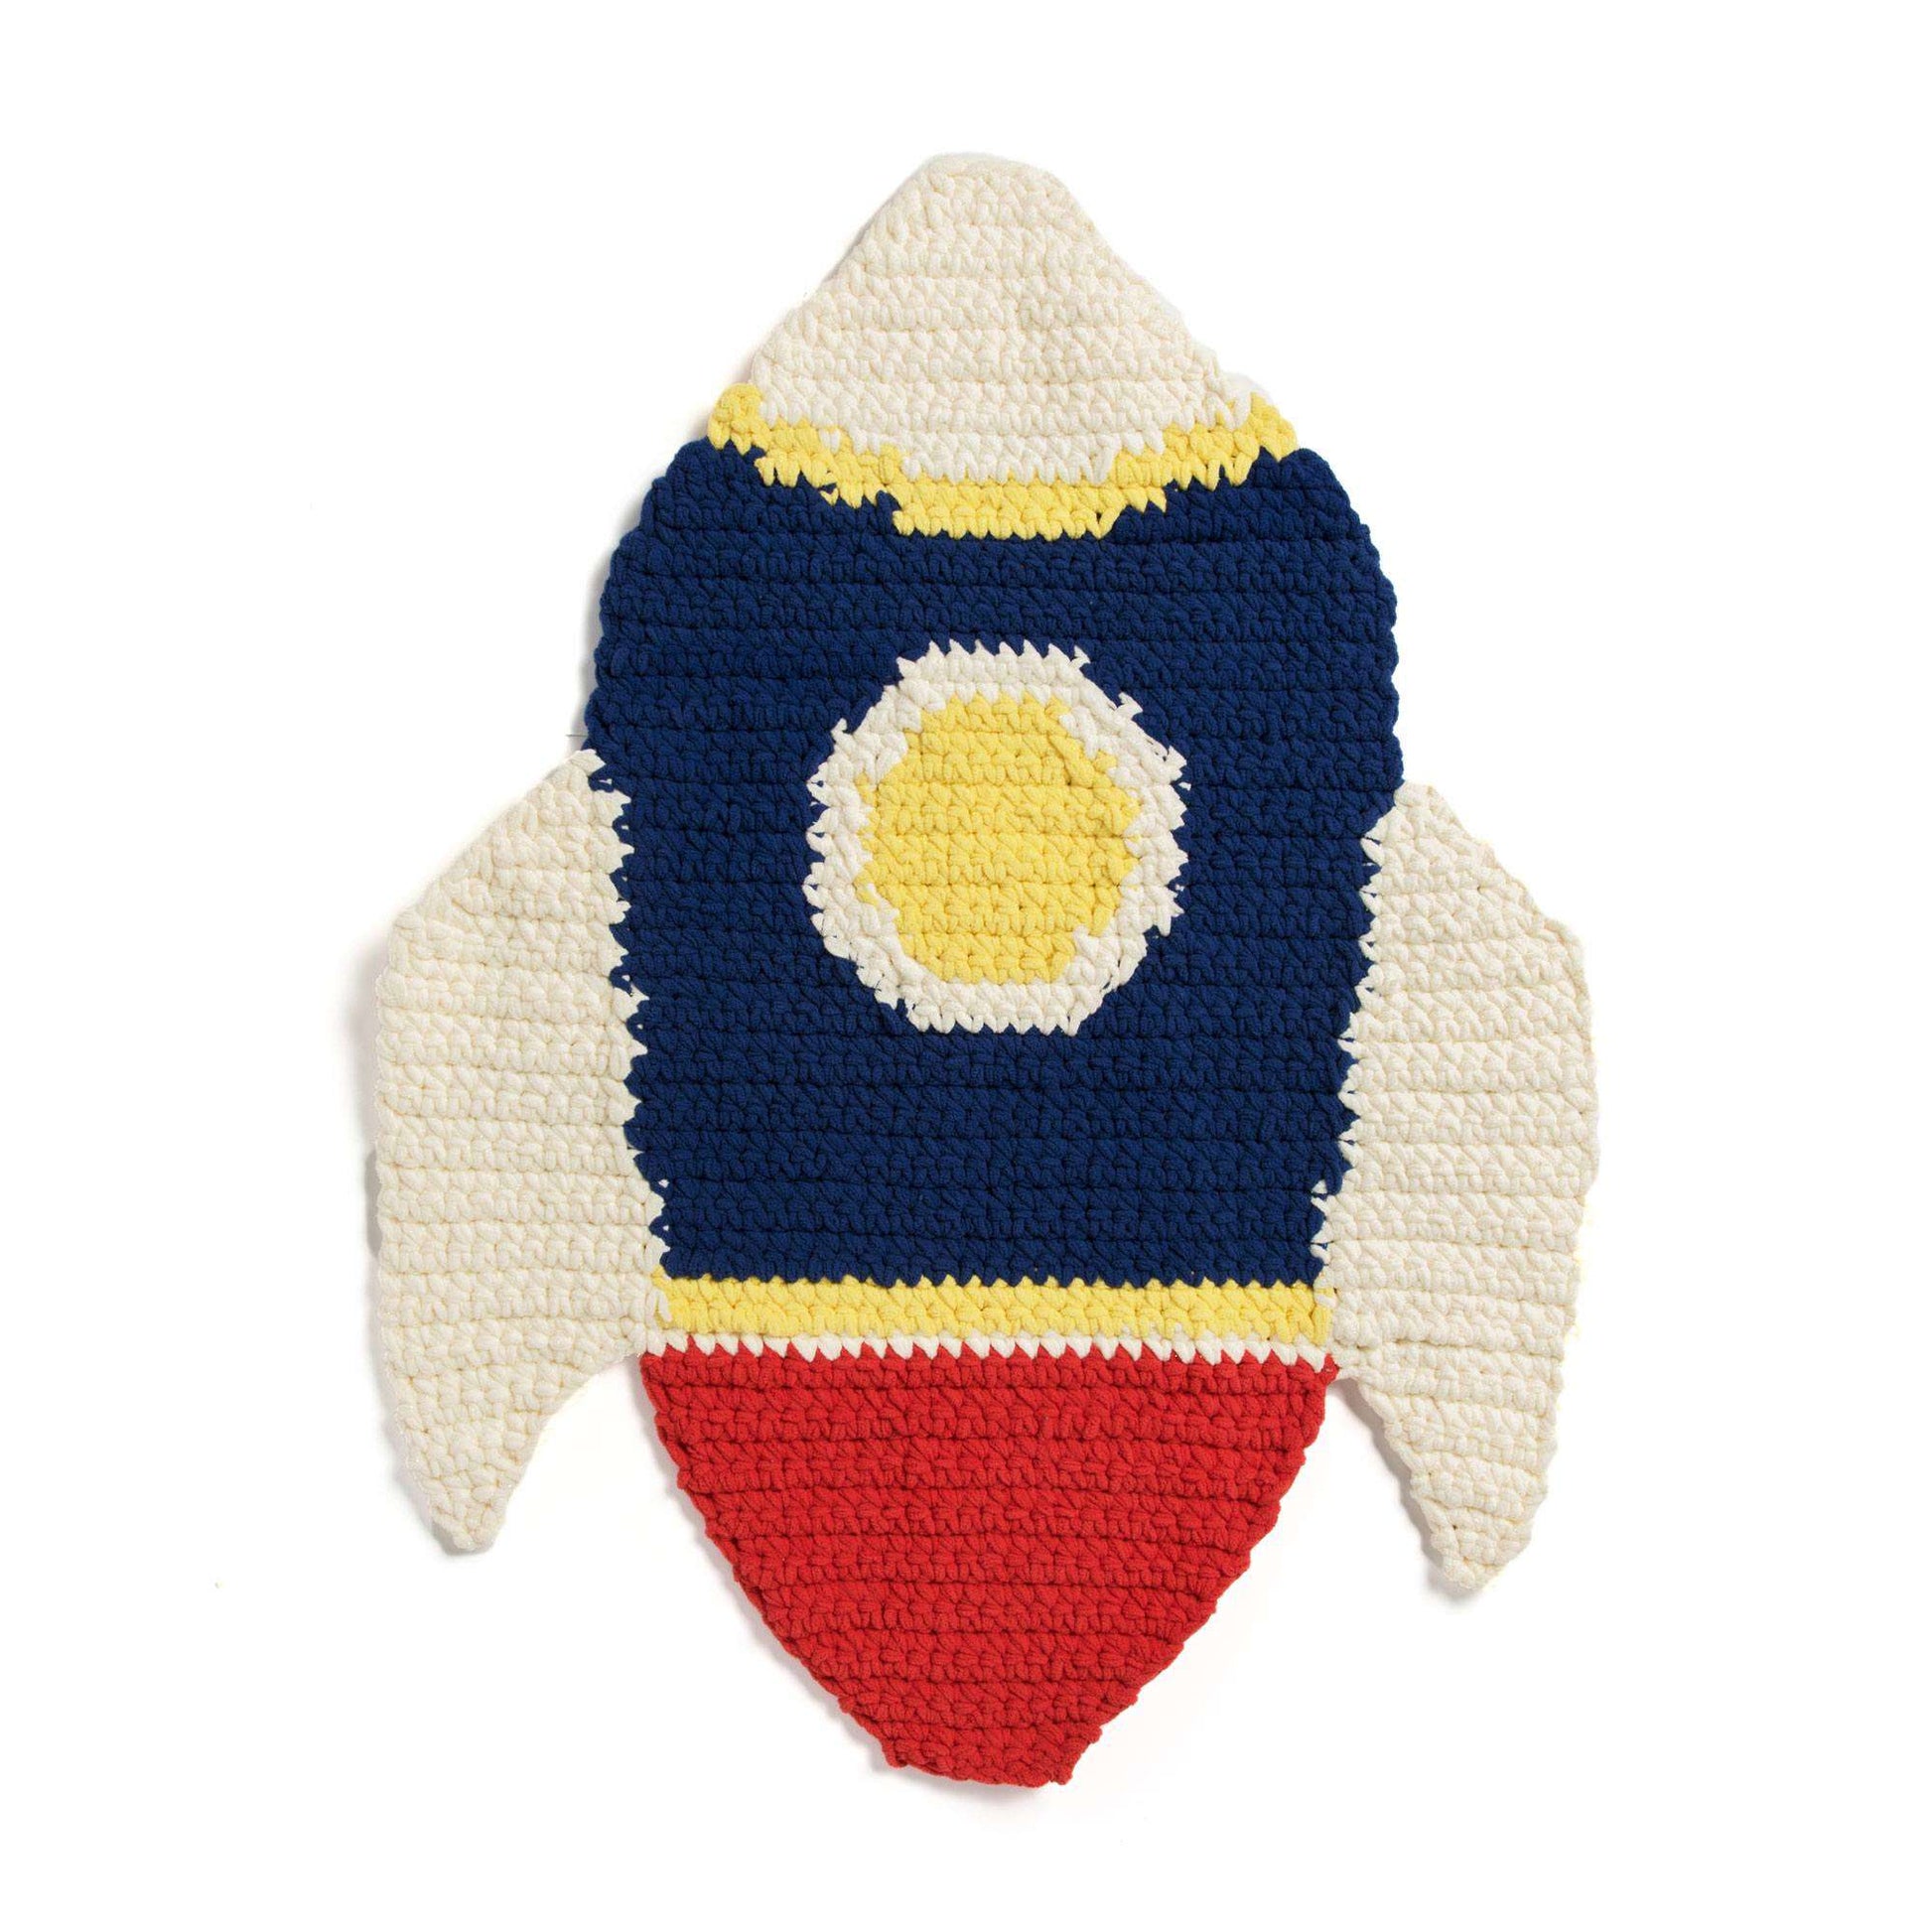 Free Bernat Crochet Rocket Rug Pattern